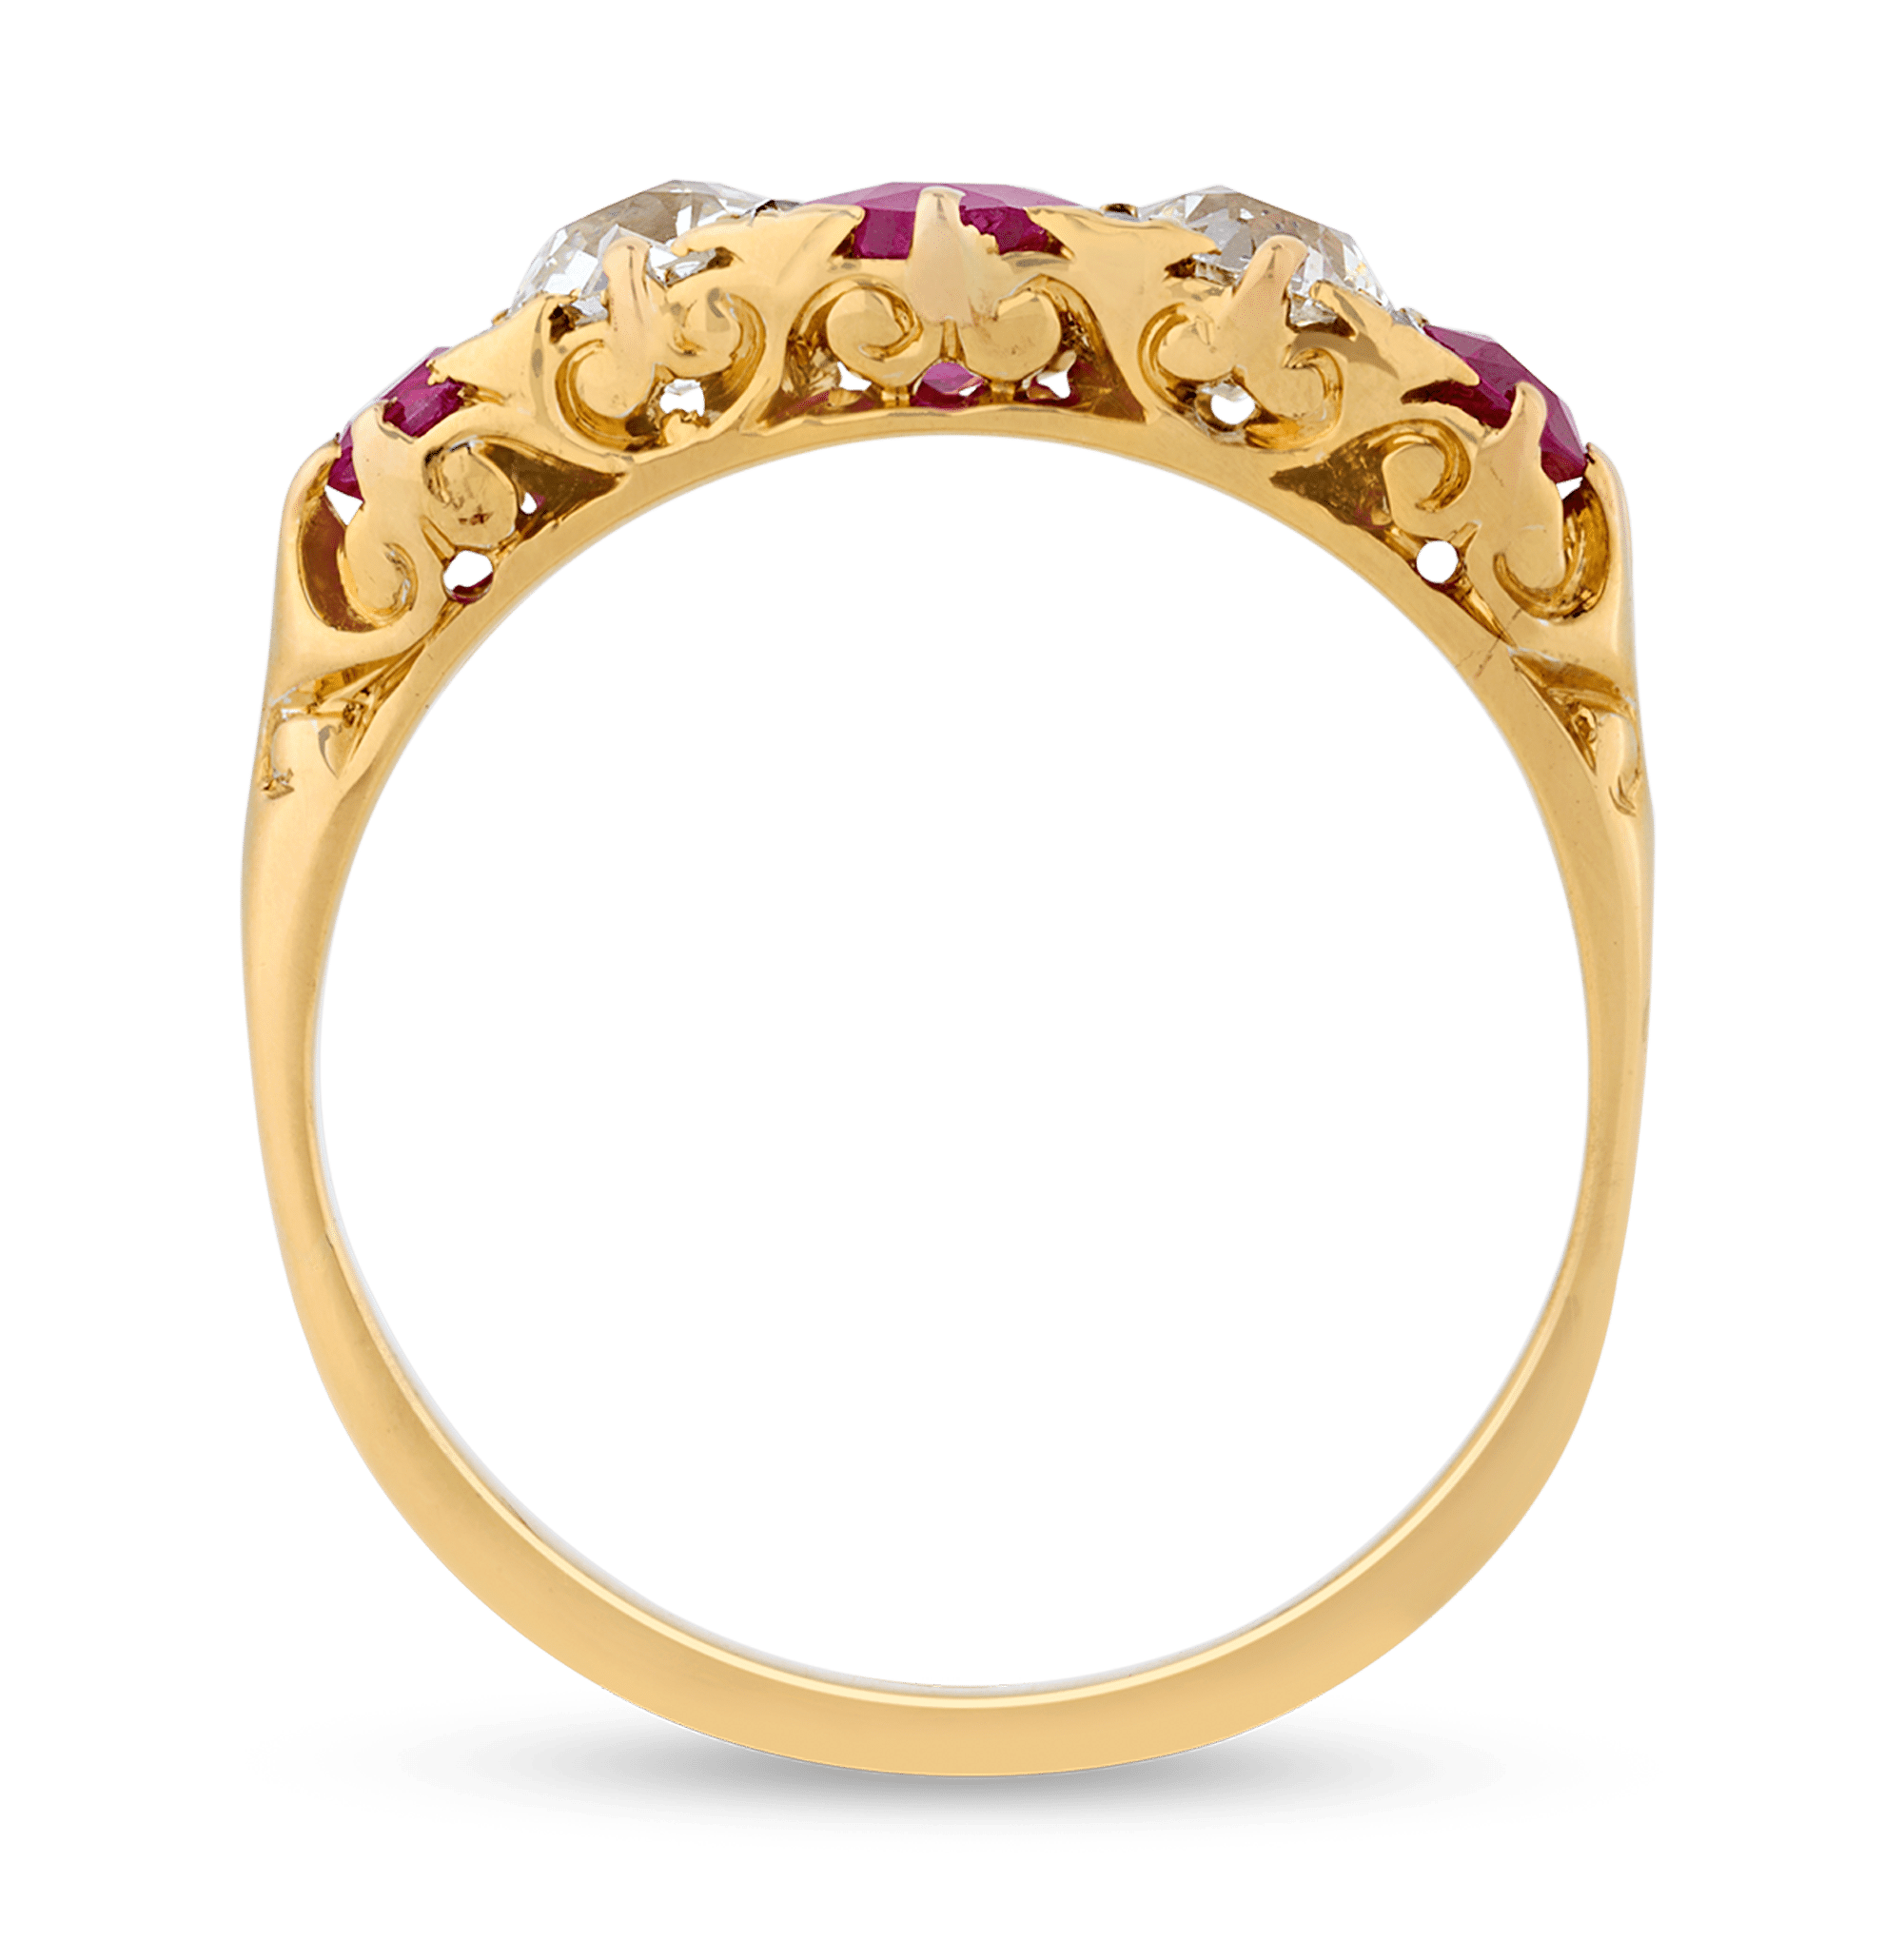 Untreated Burma Ruby and Diamond Ring